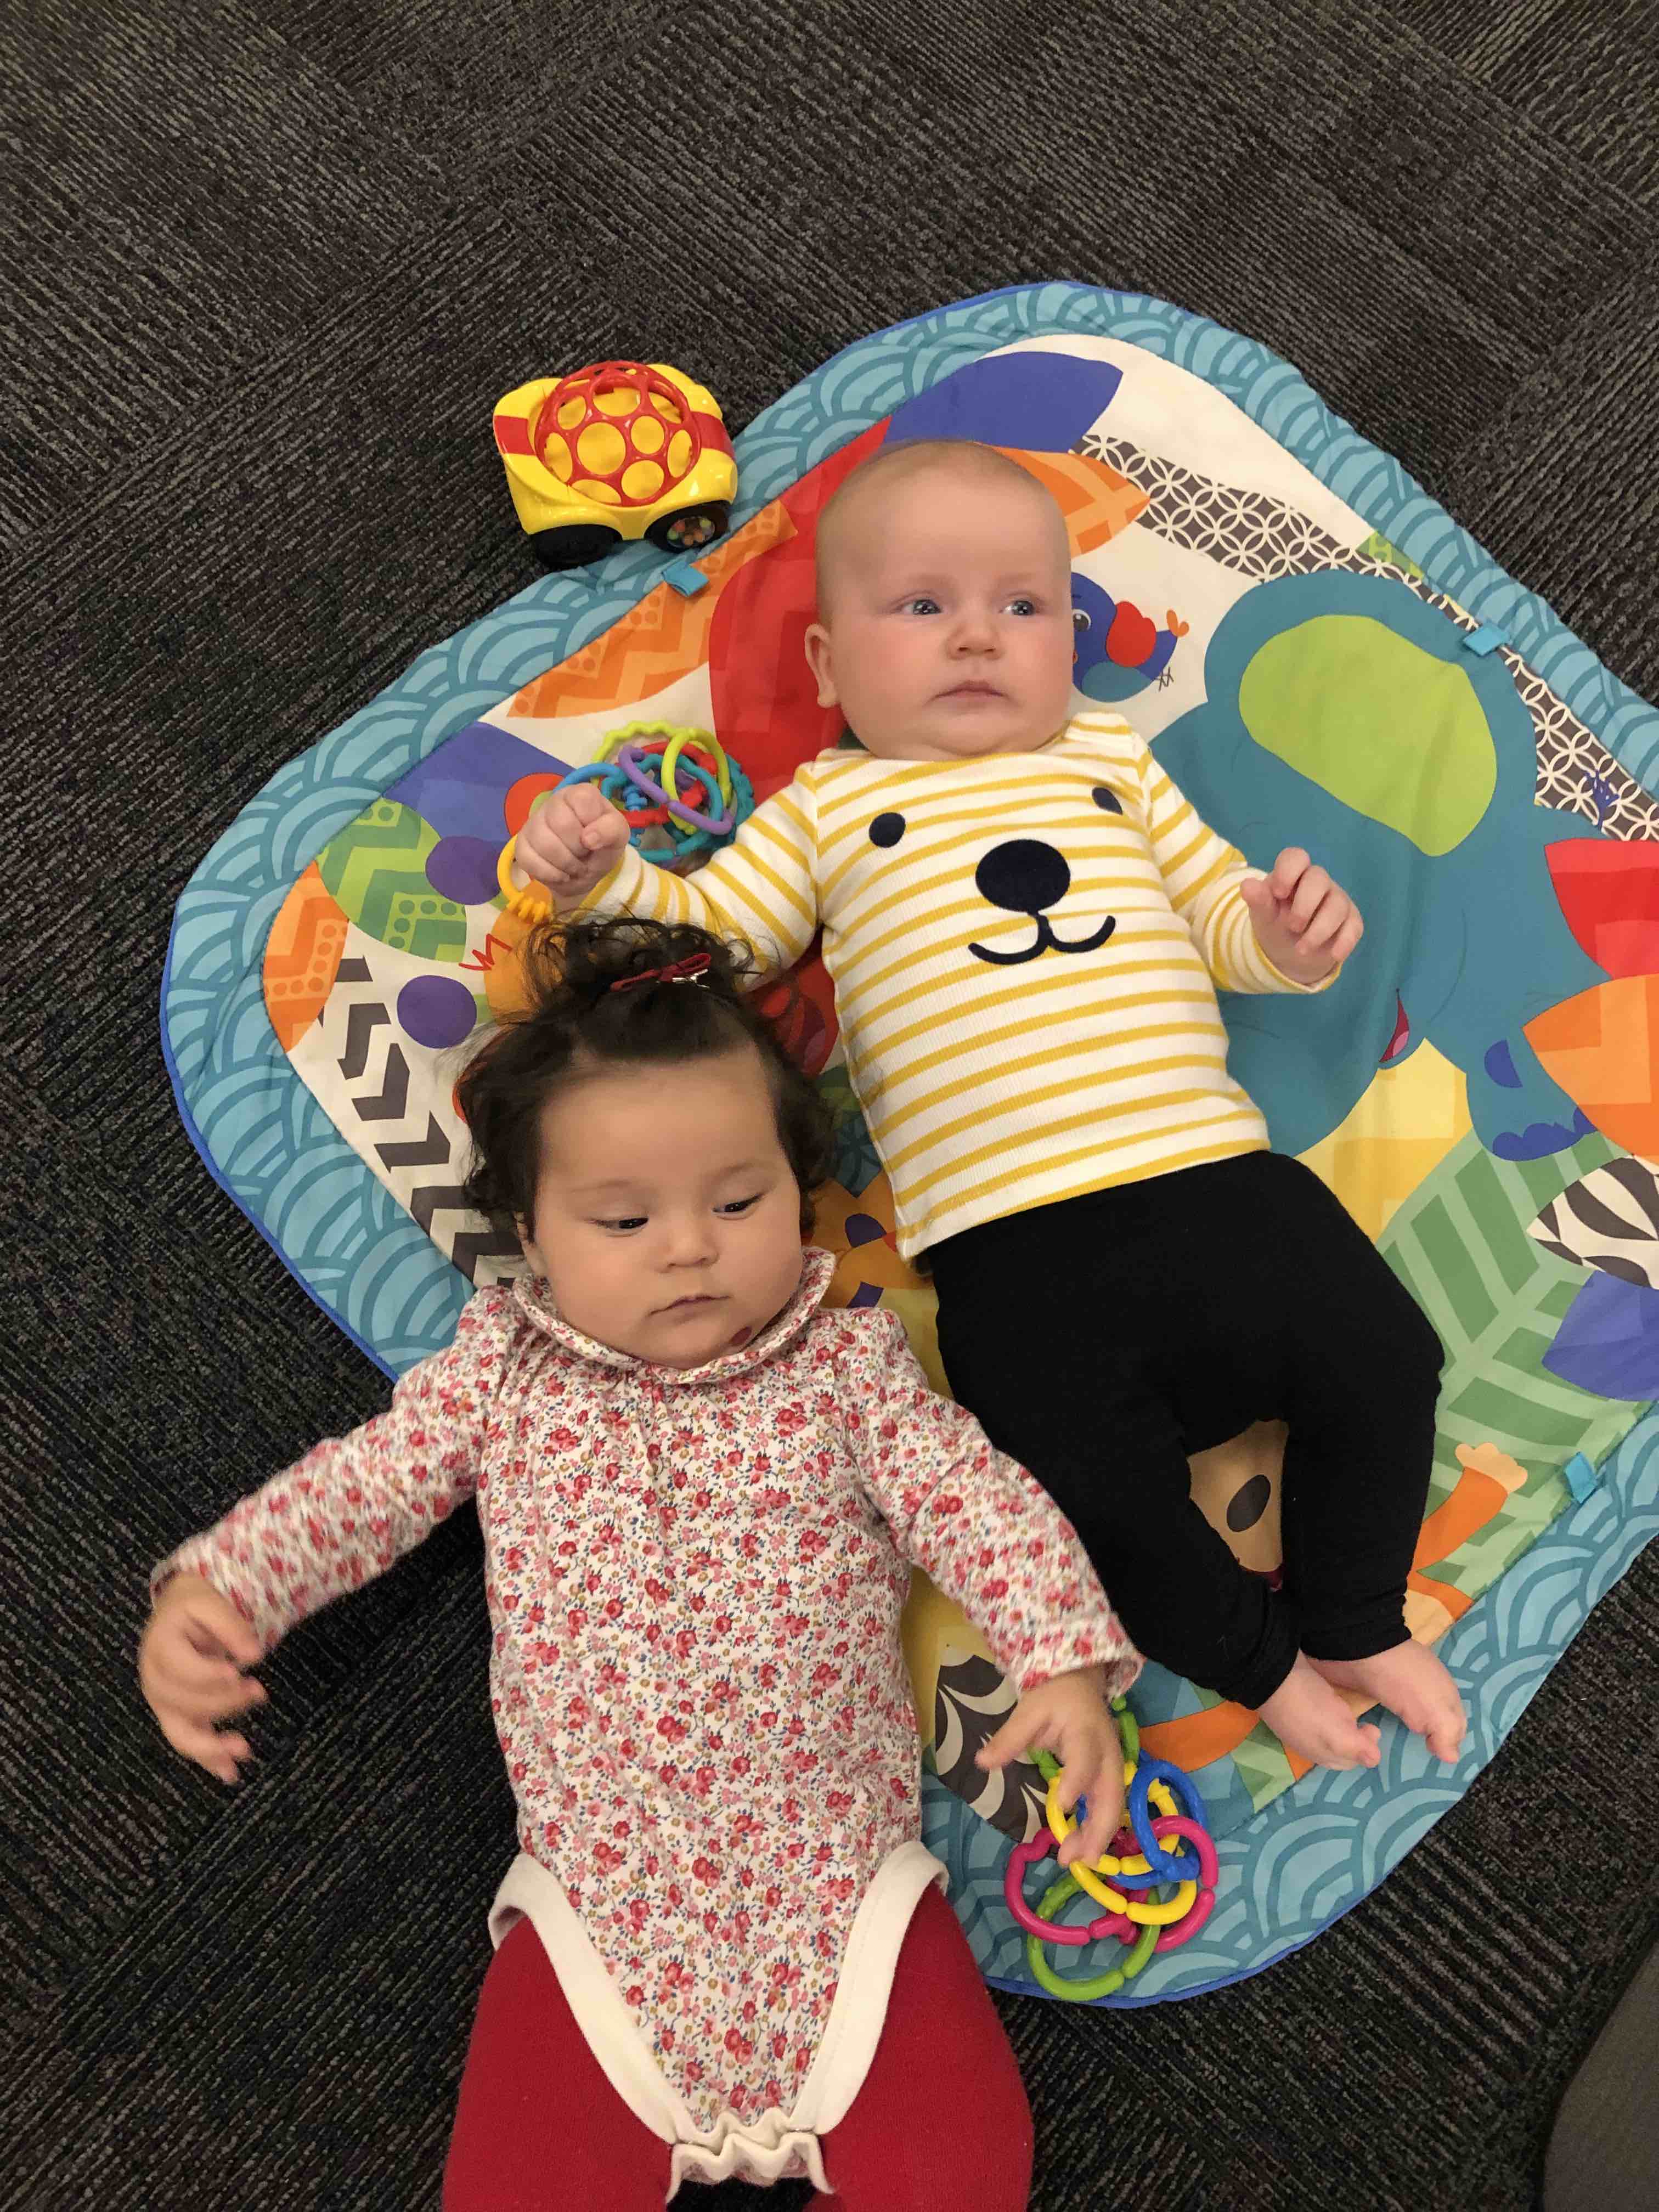 Two babies lying on a rug